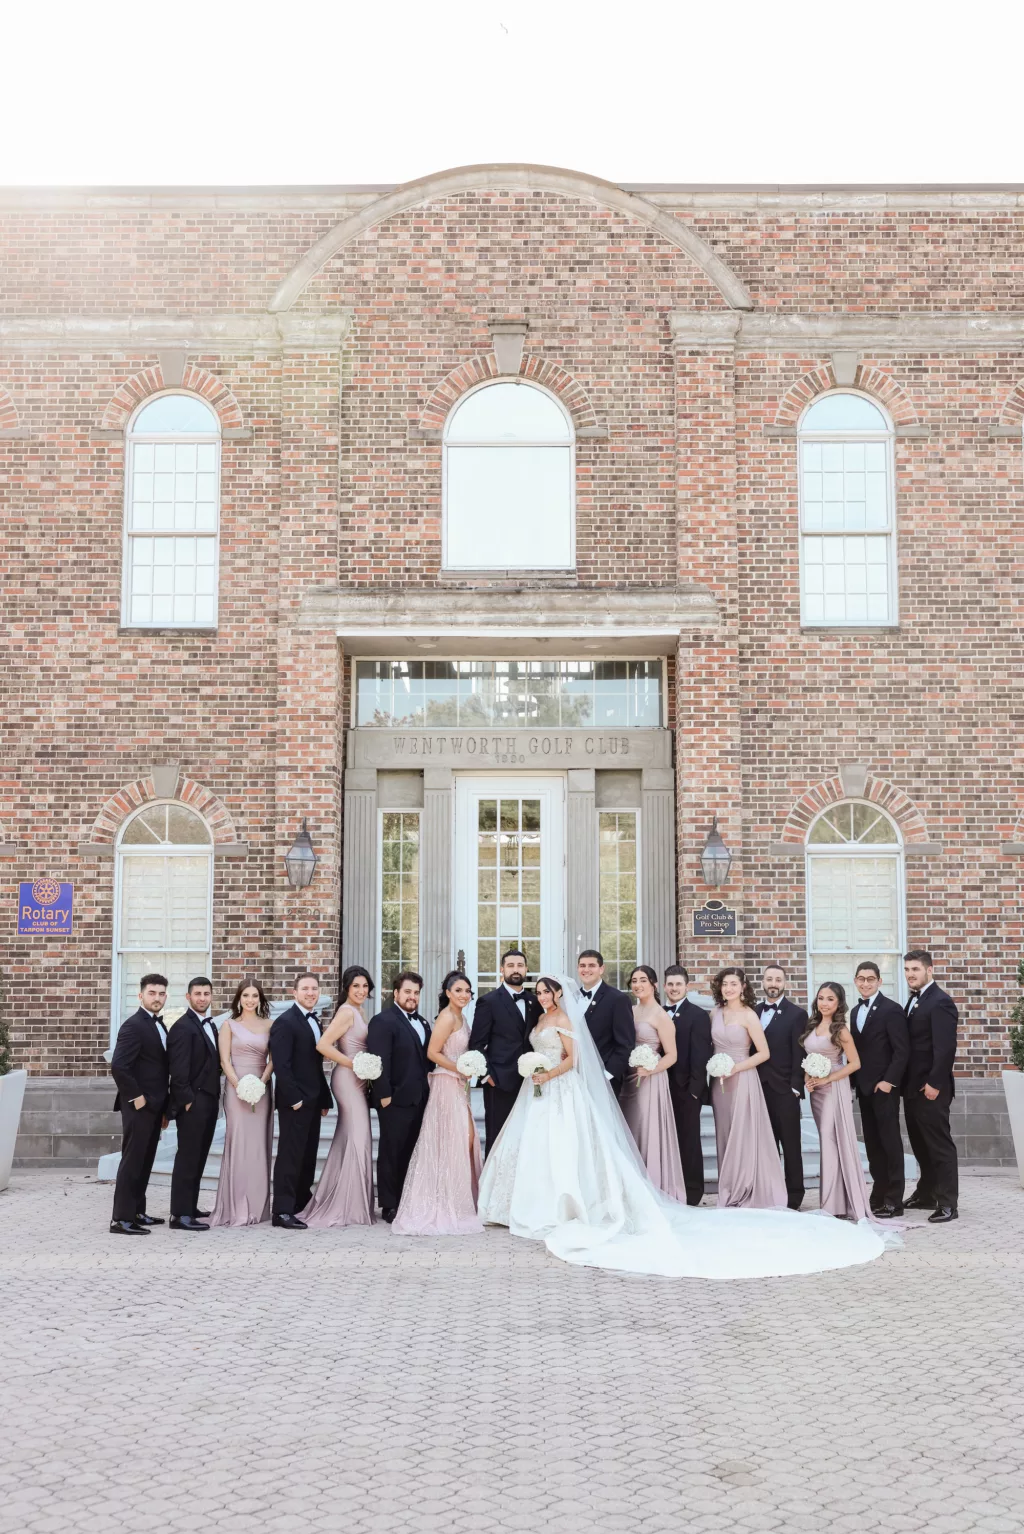 Matching Mauve Floor Length Bridesmaids Dresses Inspiration | Groomsmen Black Tuxedo Wedding Attire Ideas